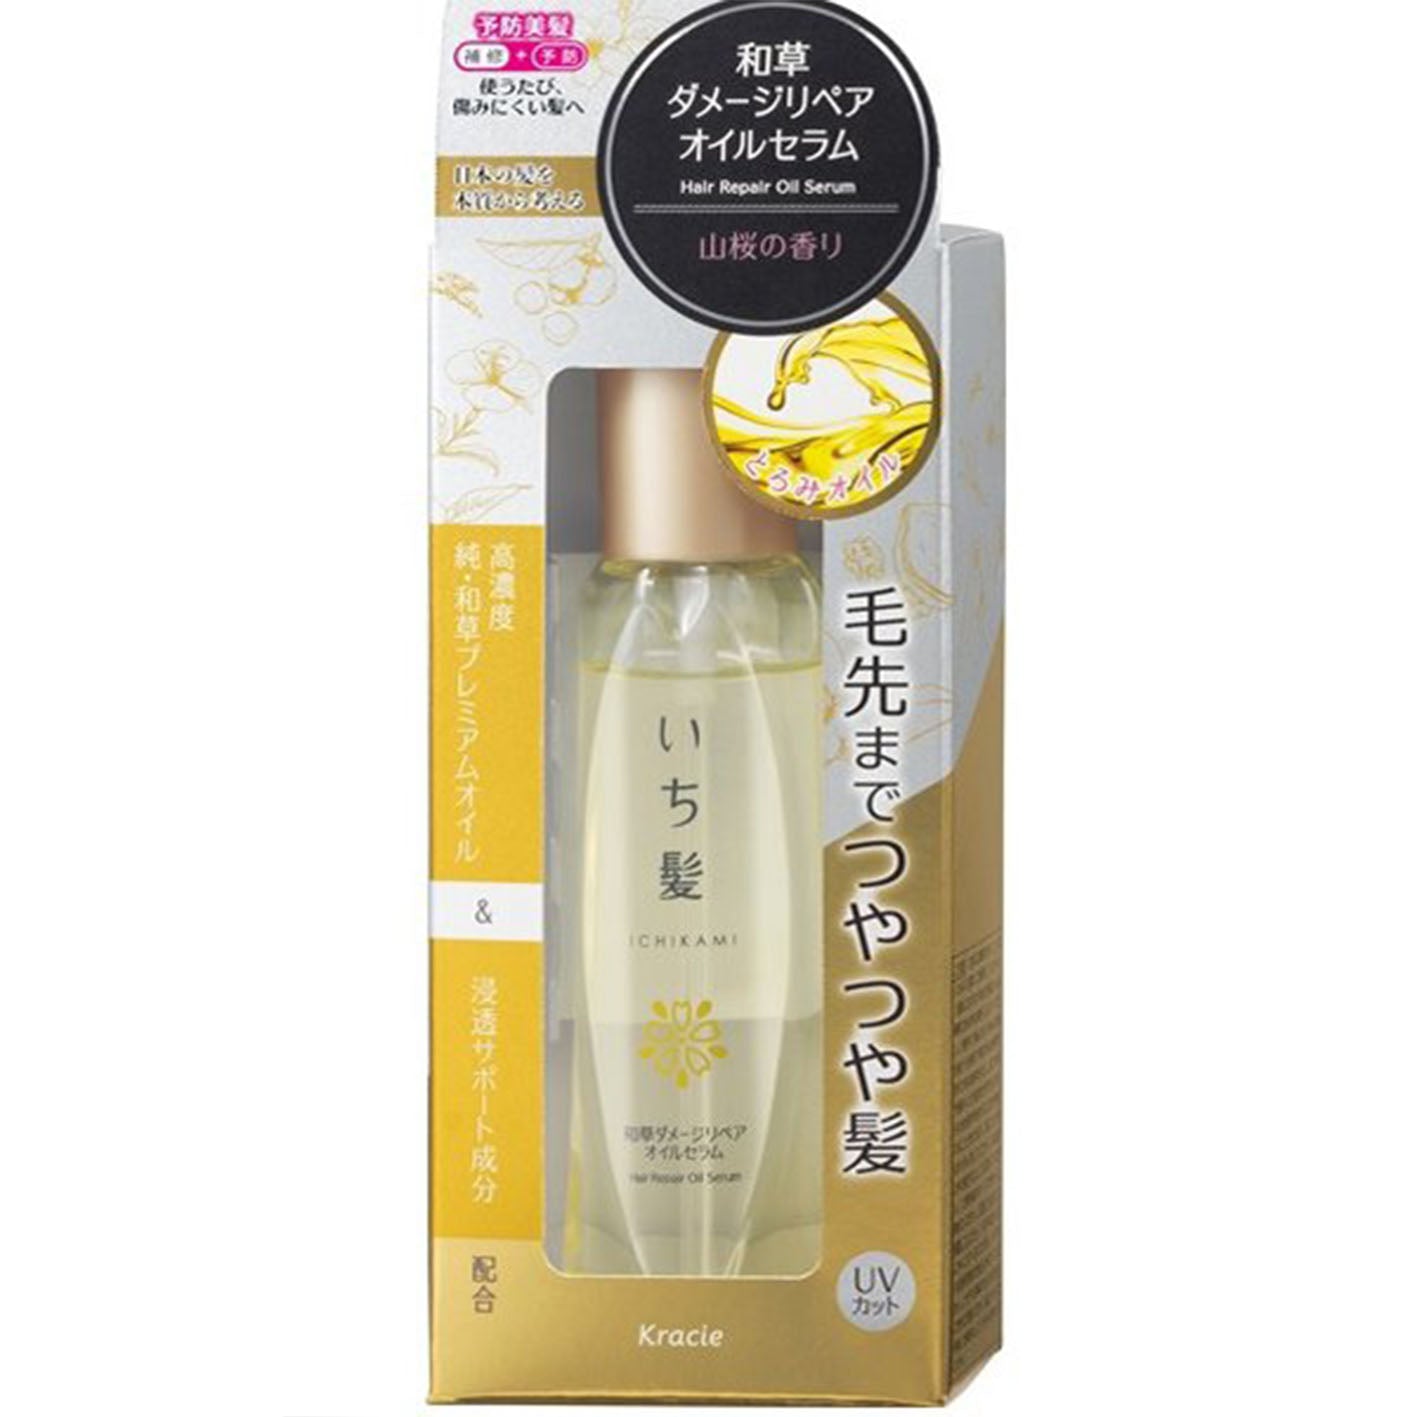 Ichikami Nikogusa Damage Repair Oil Serum 60ml - Harajuku Culture Japan - Japanease Products Store Beauty and Stationery